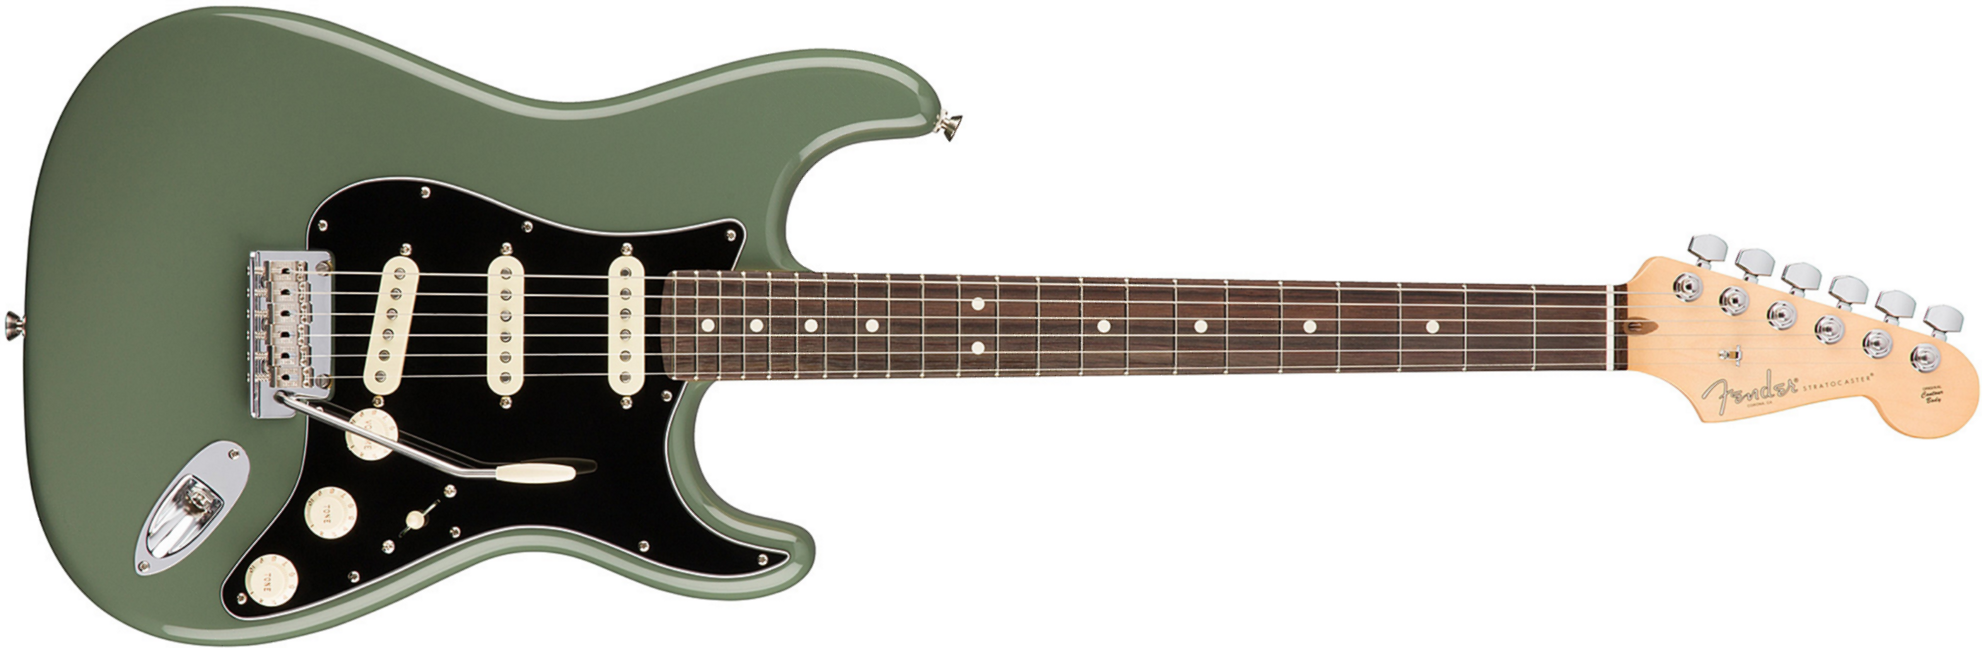 Fender Strat American Professional 2017 3s Usa Rw - Antique Olive - Guitarra eléctrica con forma de str. - Main picture